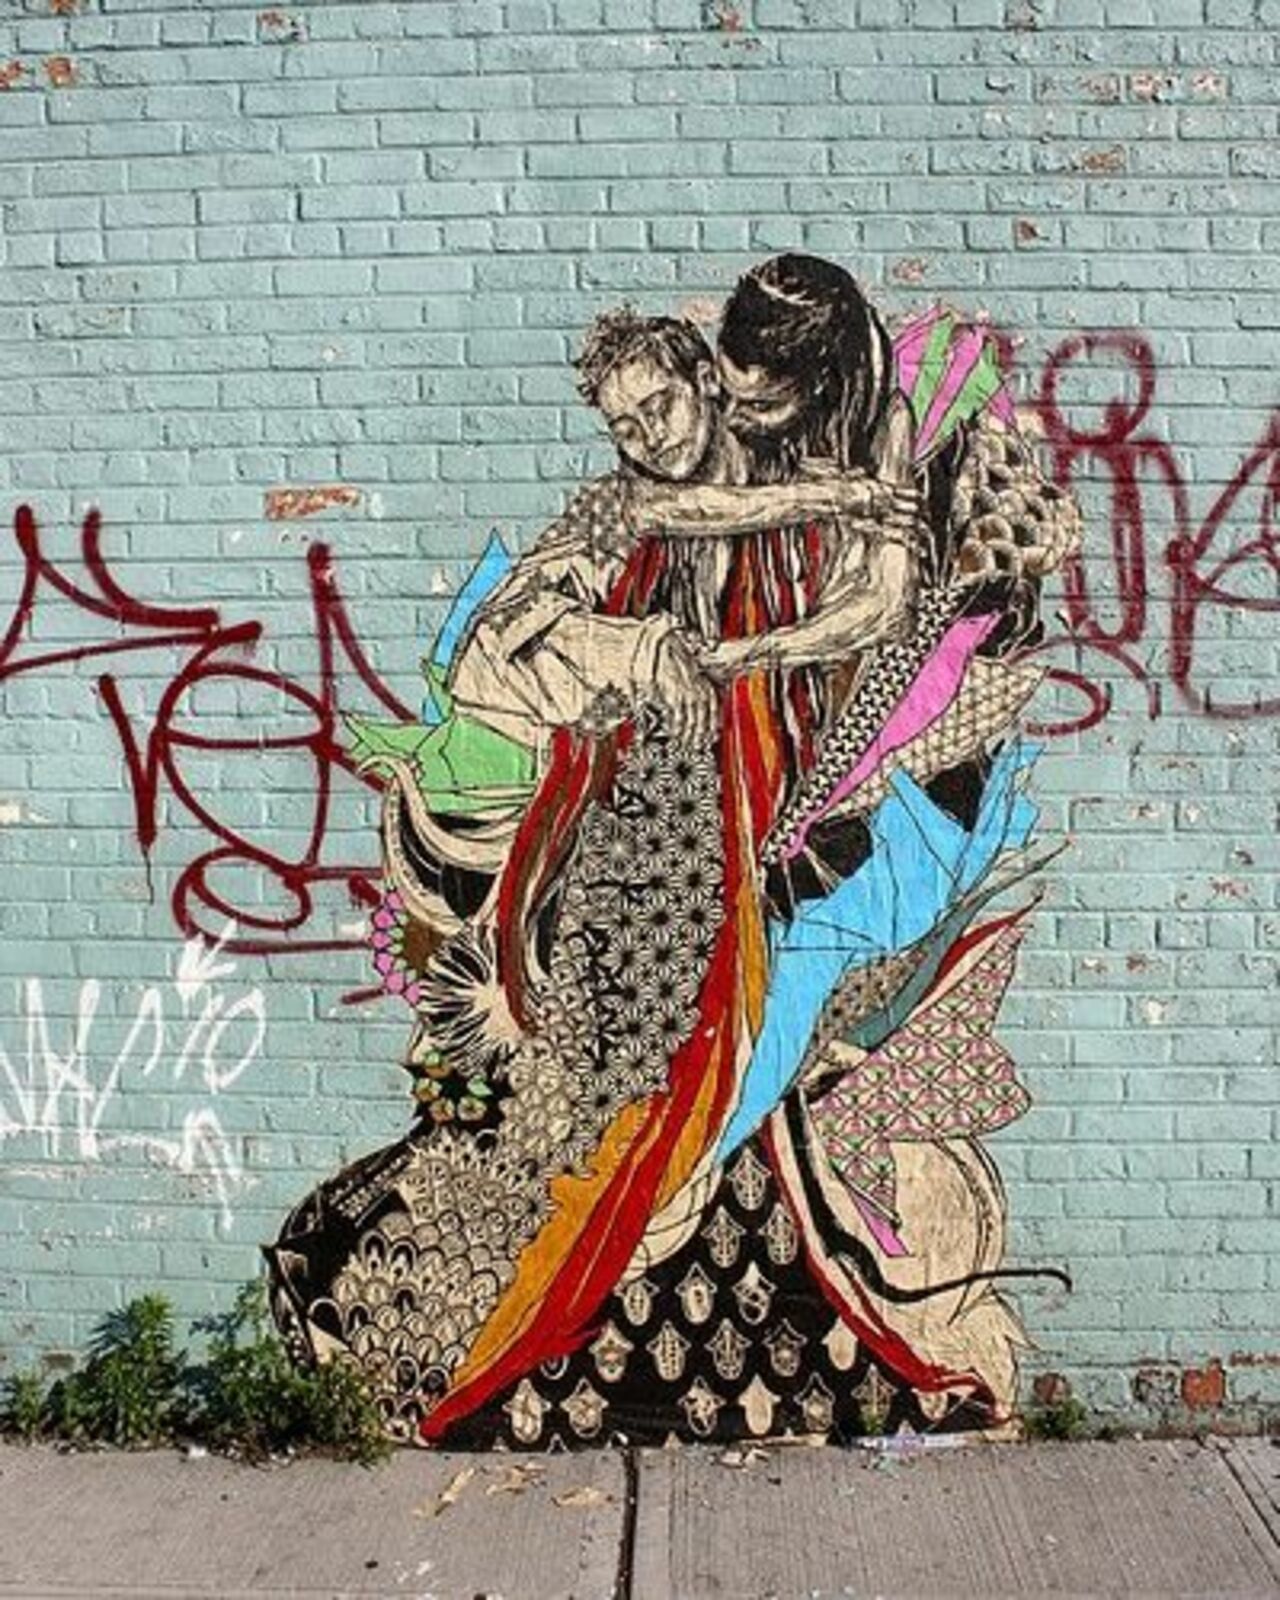 Mural by Swoon#streetart #mural #graffiti #art https://t.co/thh8O4PVhH